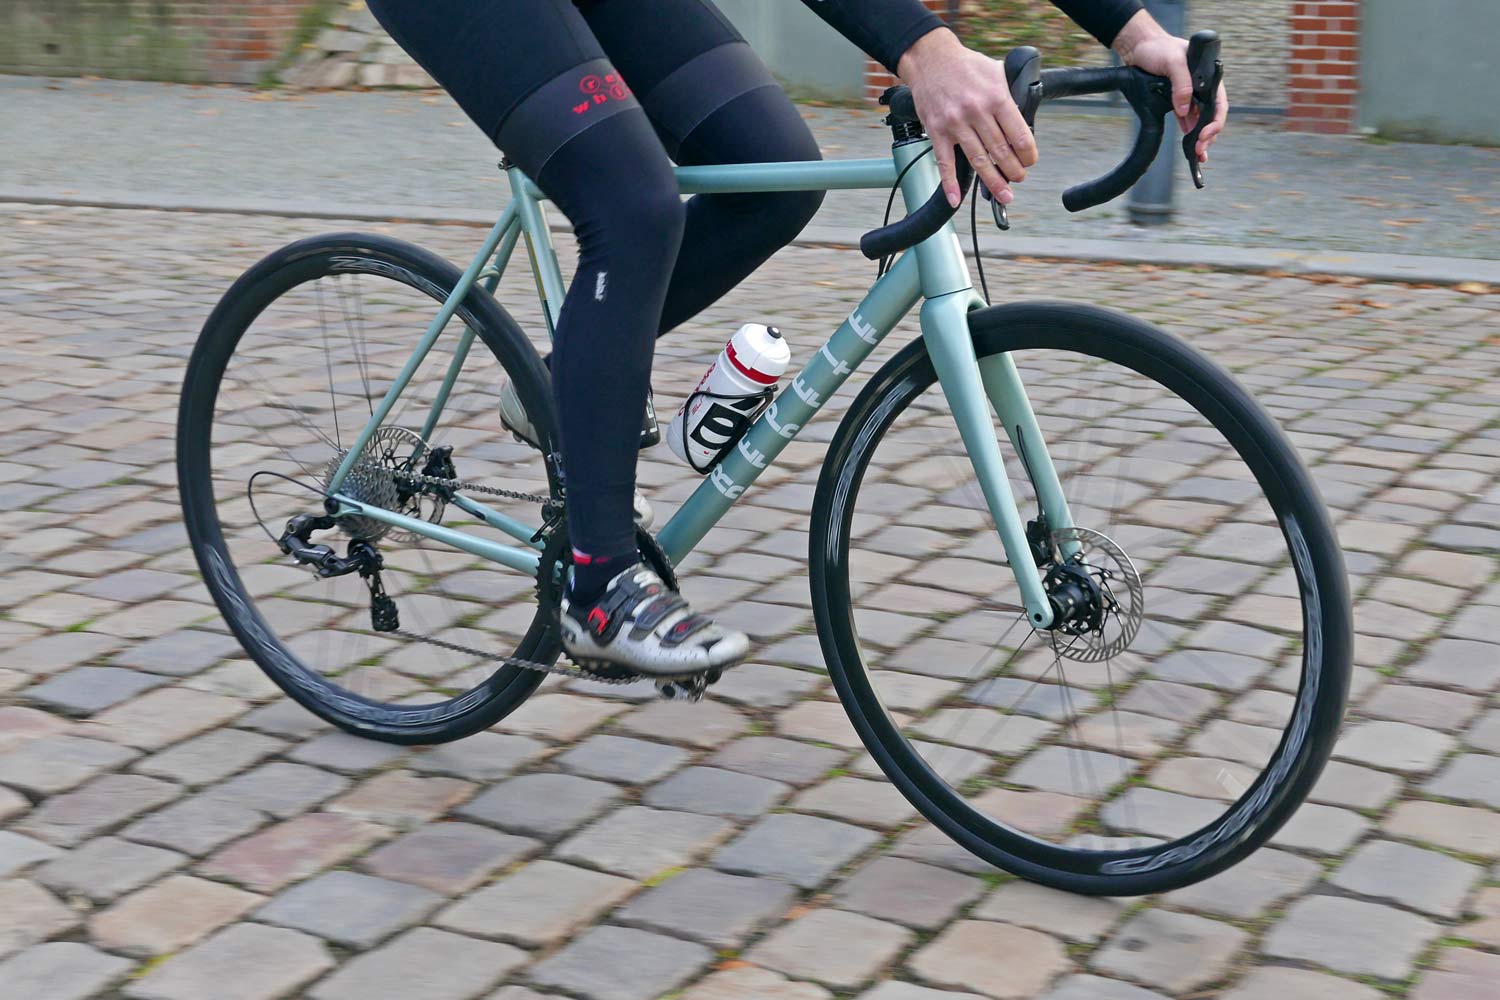 Repete, Czech handmade steel road & gravel bikes, Repete Cycles relaunch custom bikes made in Prague